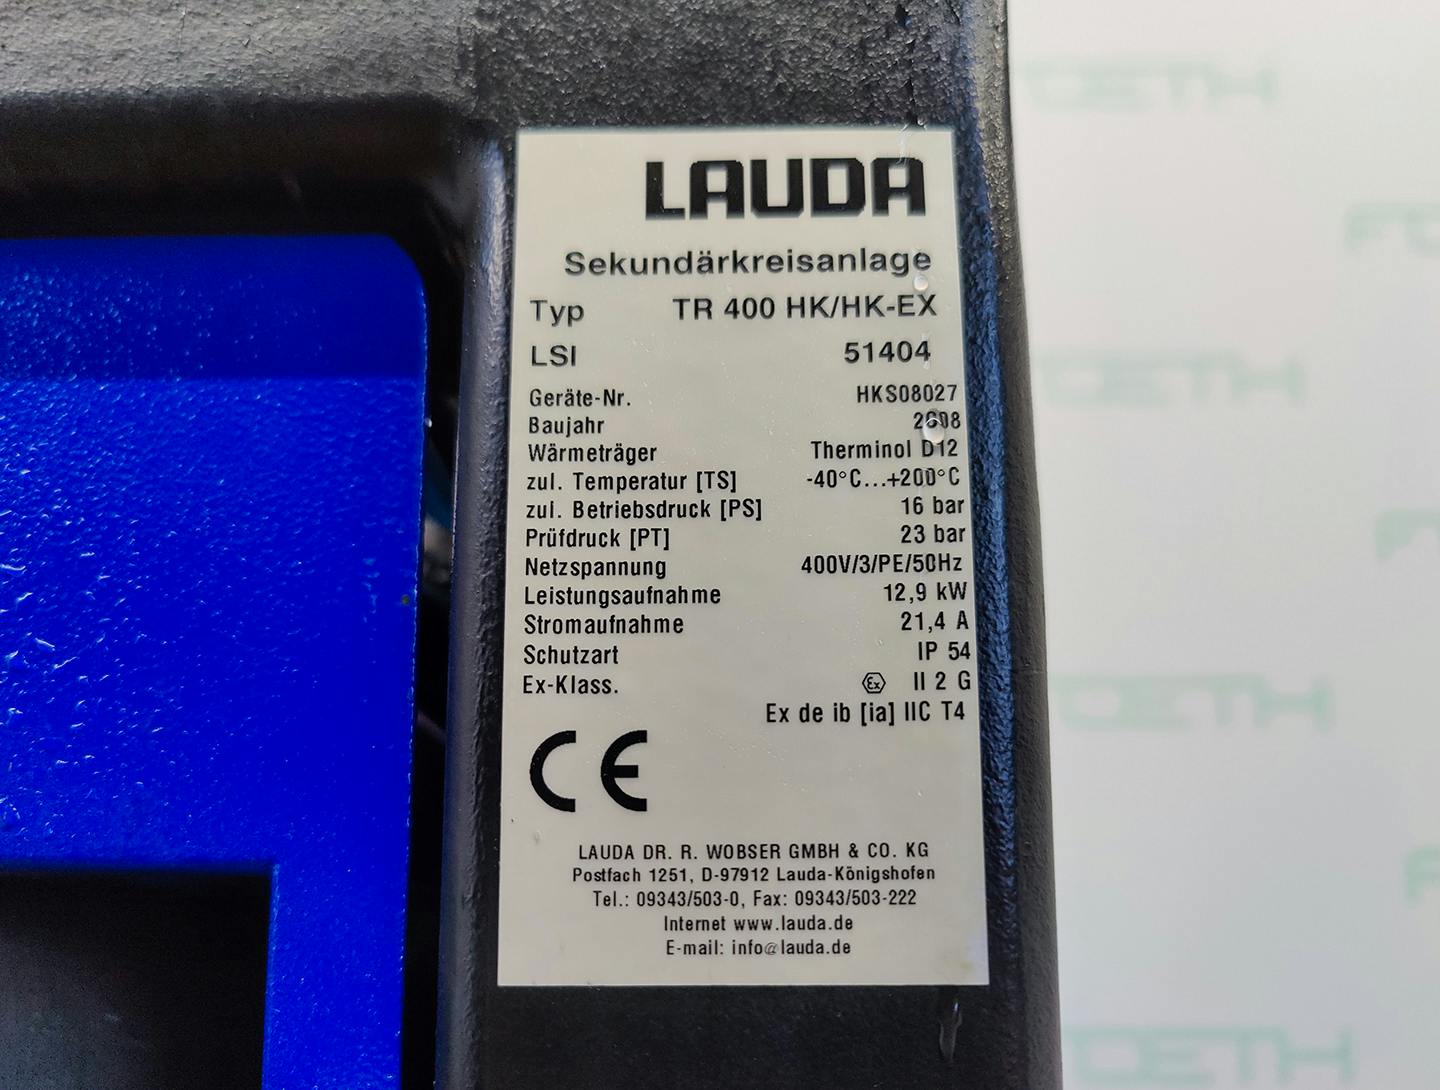 Lauda TR400 HK/HK-EX "secondary circuit system" - Chladic recirkulacní - image 6